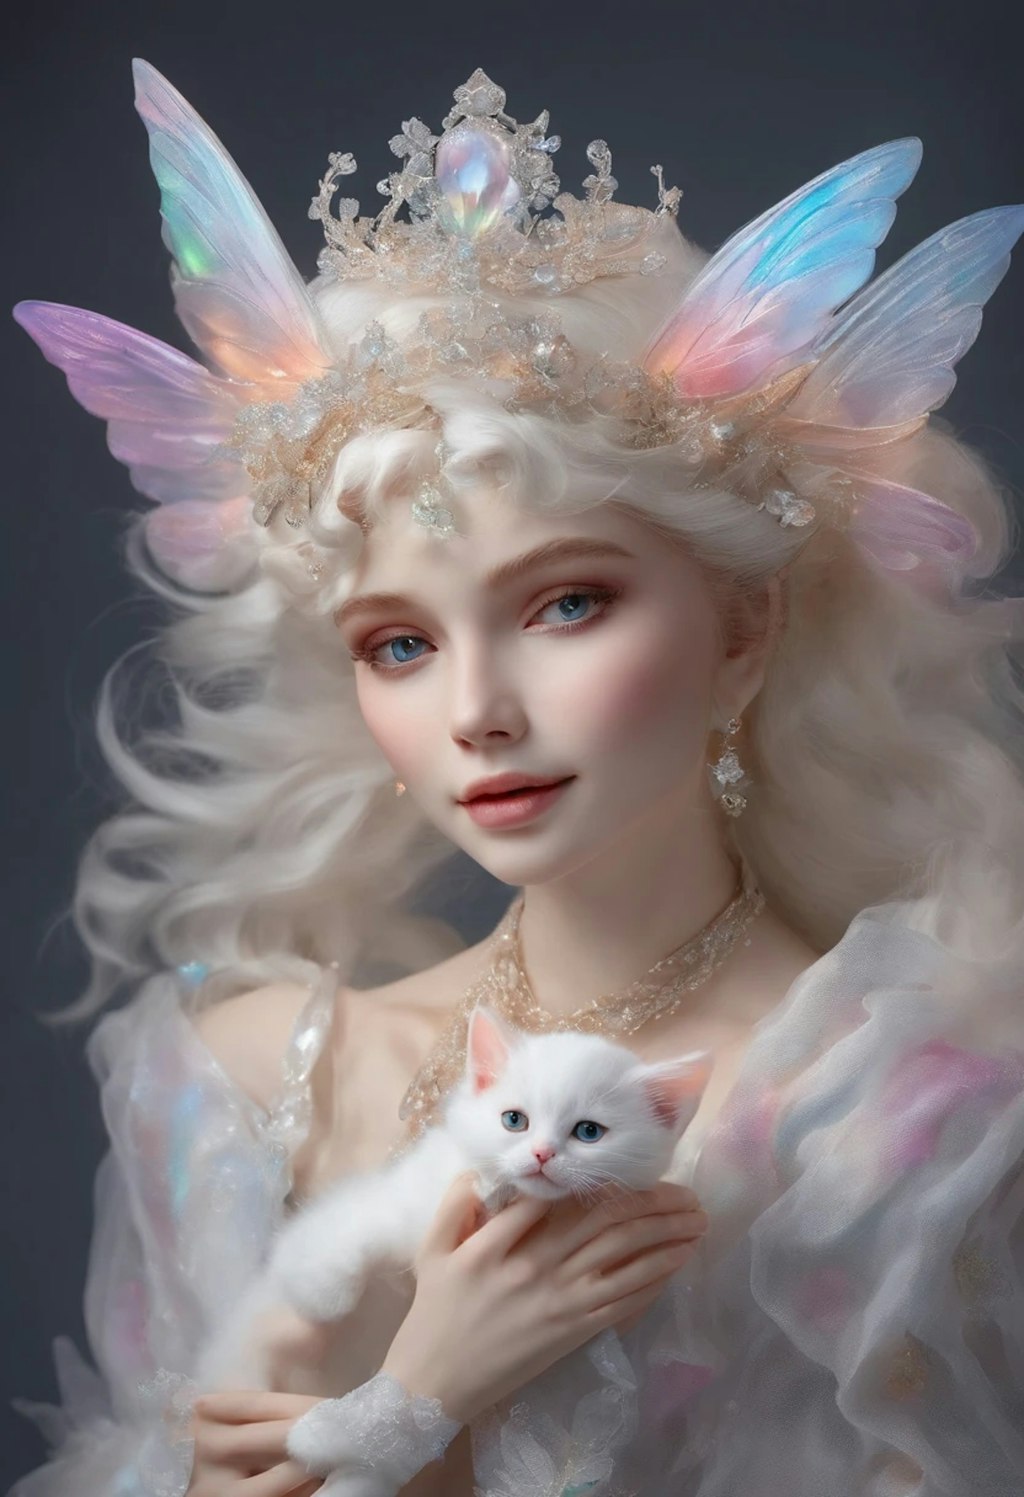 妖精と白猫